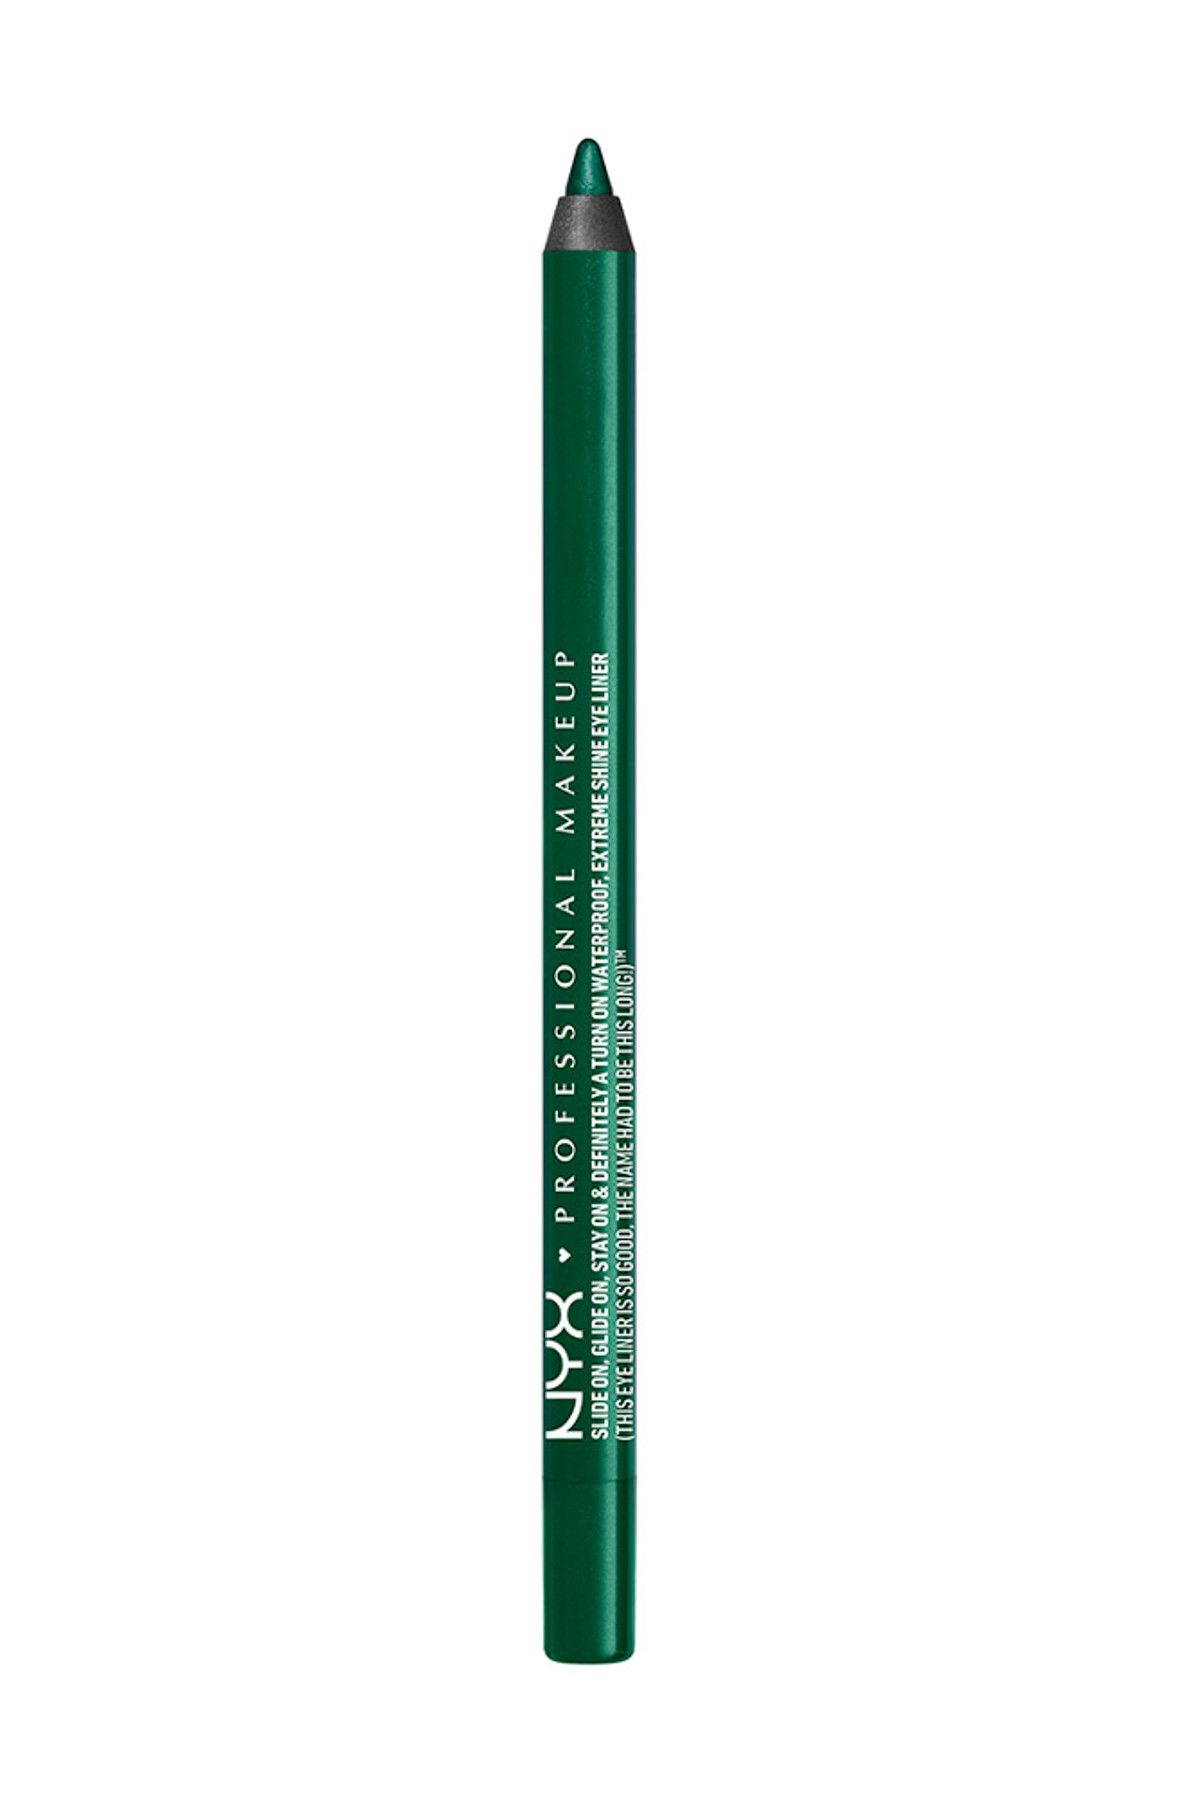 NYX Professional Makeup Yeşil Göz Kalemi - Slide on Eye Pencil Tropical Green 6 g 800897141240